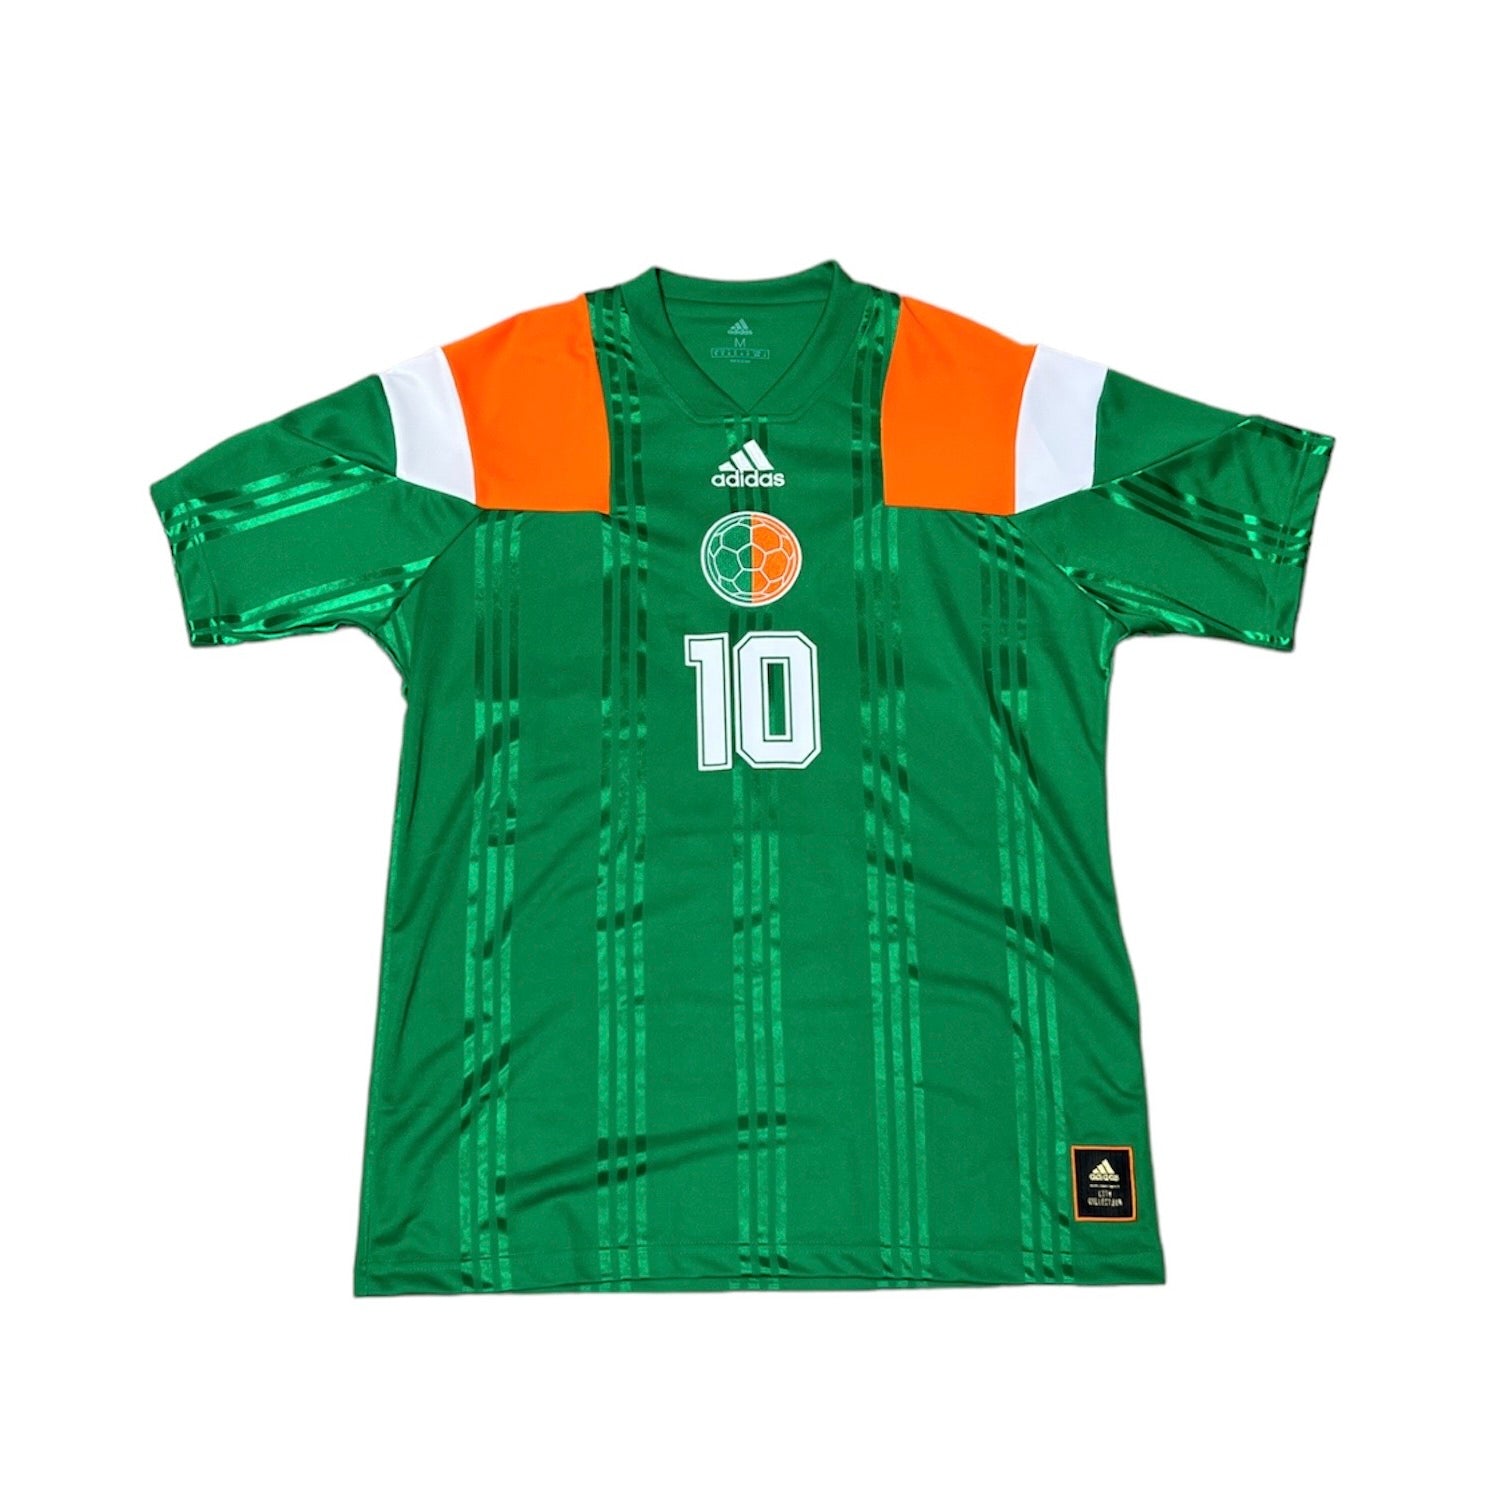 Adidas City Pack Dublin Ireland Football Jersey